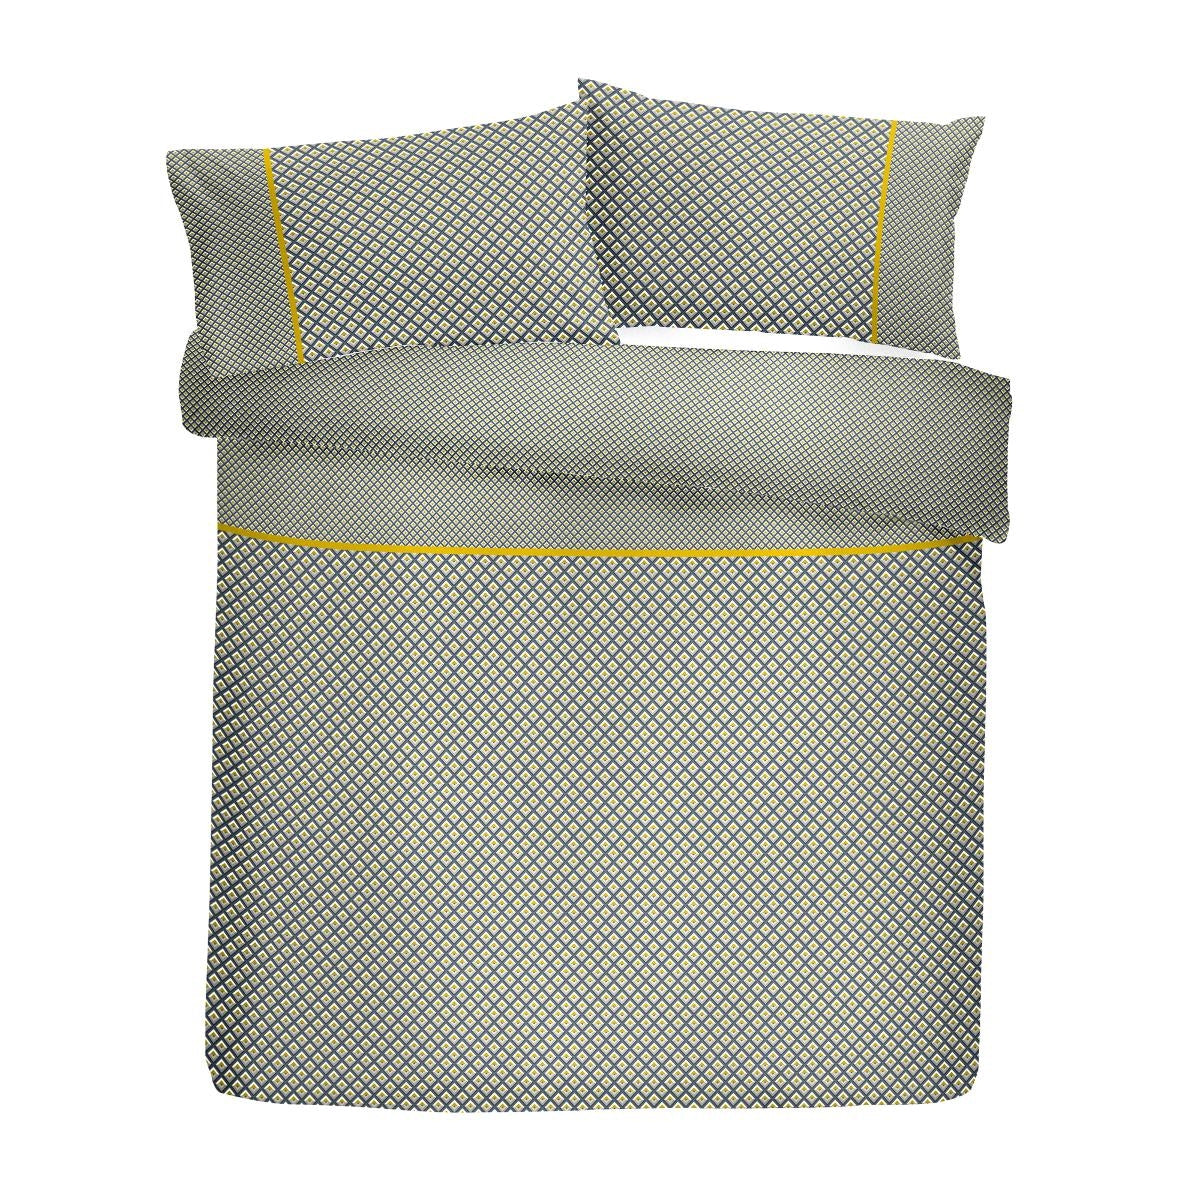 Soho Duvet Cover And Pillowcase Set (Grey-Ochre)